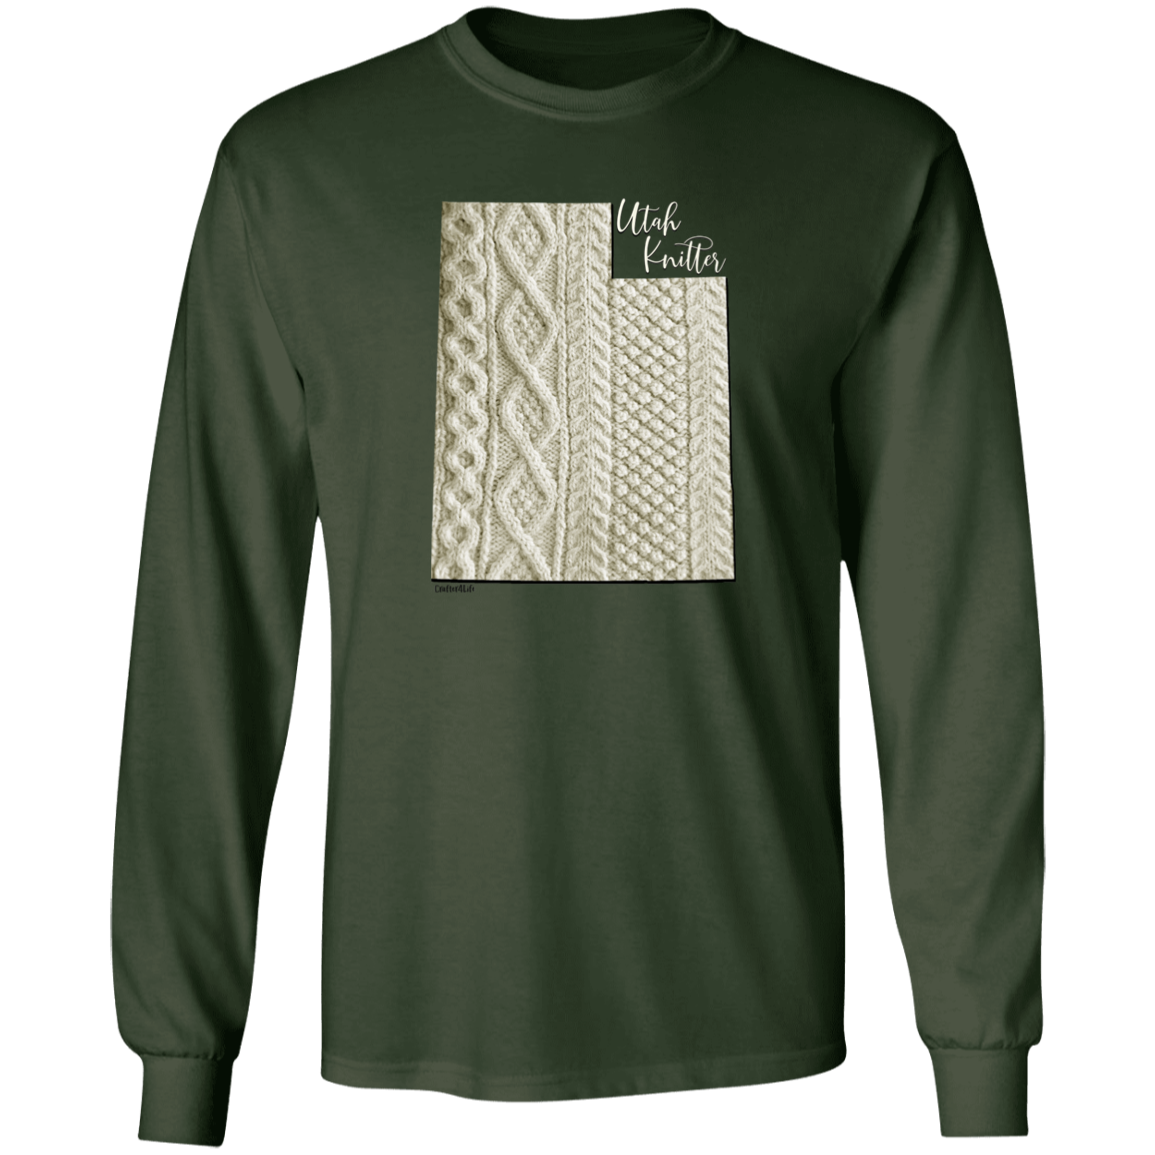 Utah Knitter LS Ultra Cotton T-Shirt